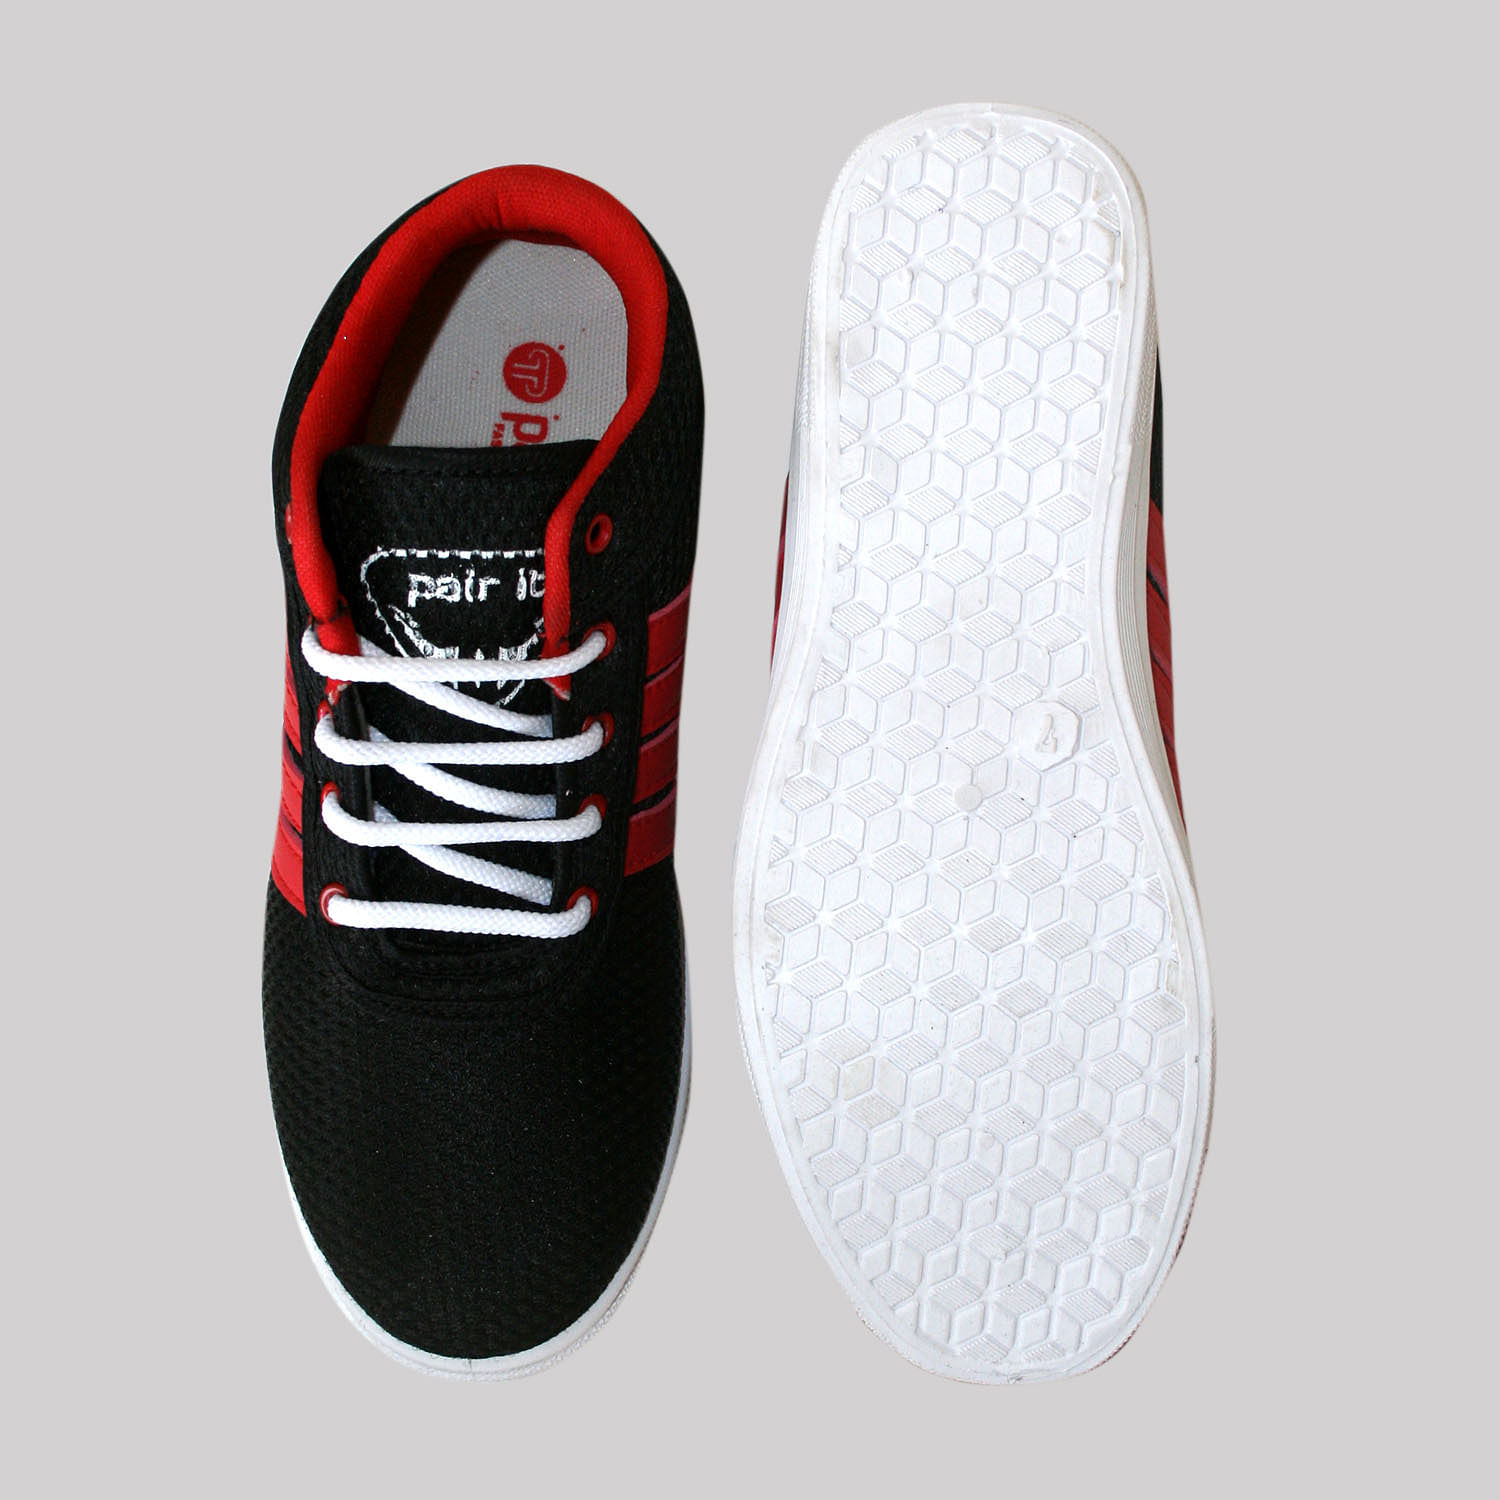 Pair-it Men's PVC Casual Shoe-DP-Casual007-Black